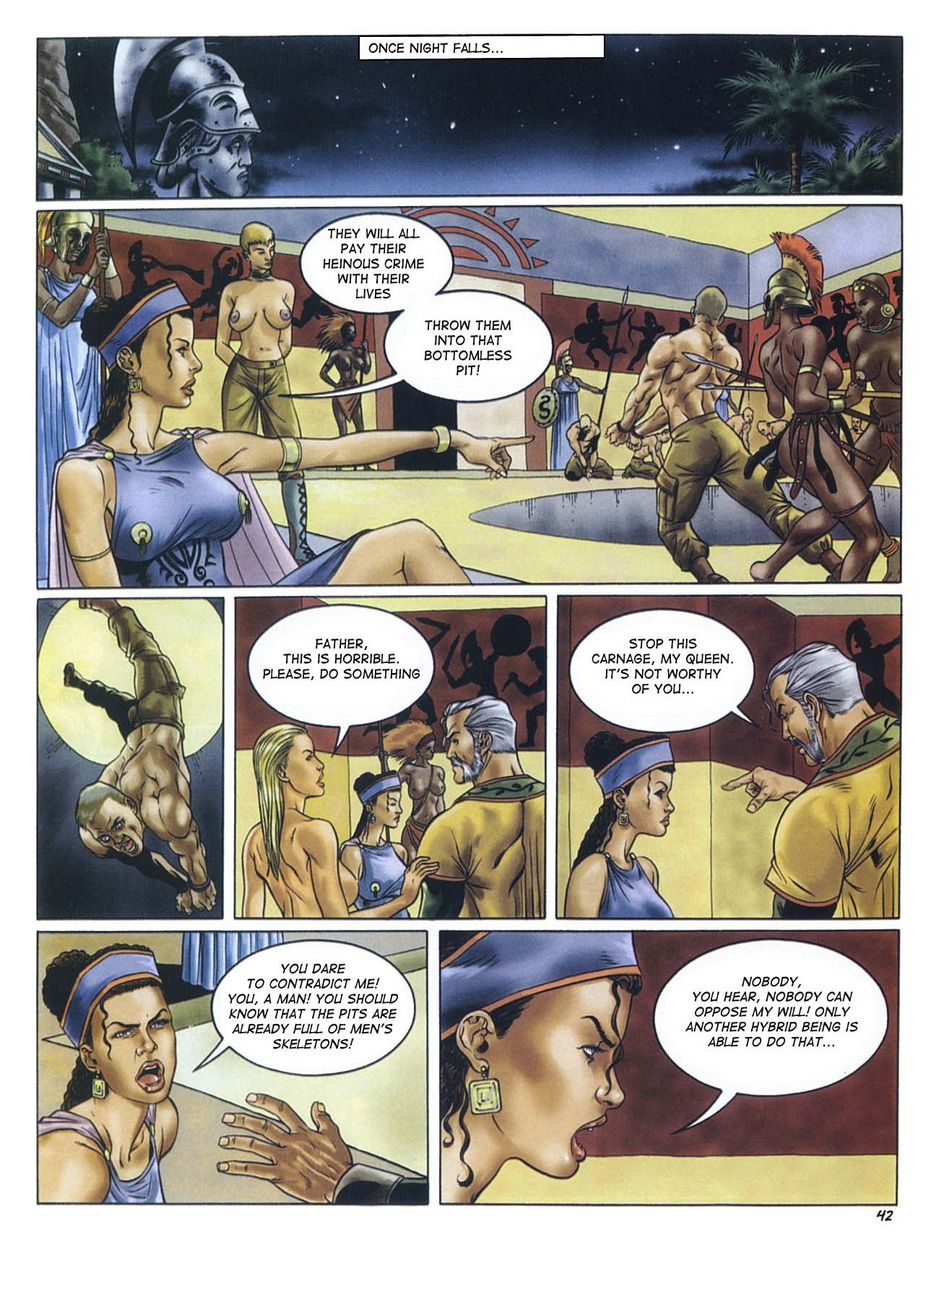 Lara Jones 1 - The Amazons page 43